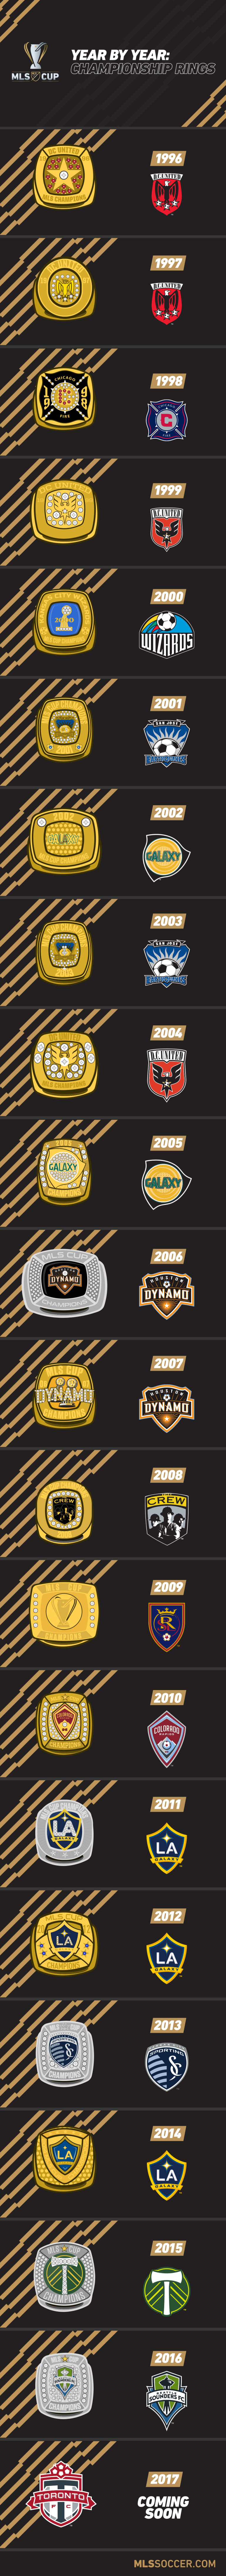 MLS Cup championship rings: a visual history - https://league-mp7static.mlsdigital.net/images/MLSCup-rings-infographic-TOR-V2.jpg?exXyTbVHlH8RJMEDHuxzHemPAnpyu2zI